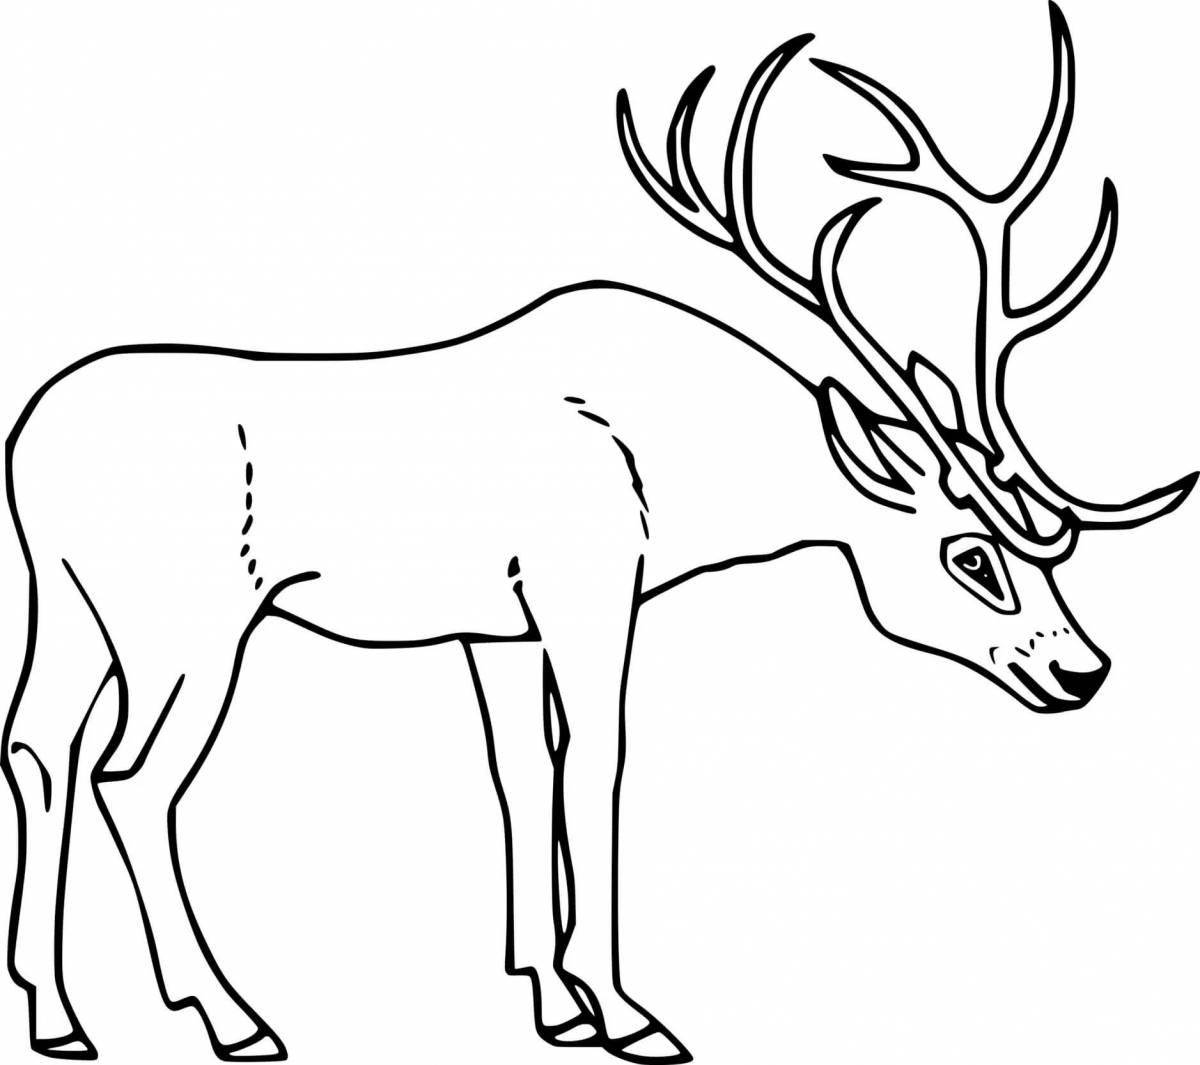 Coloring book shining red deer